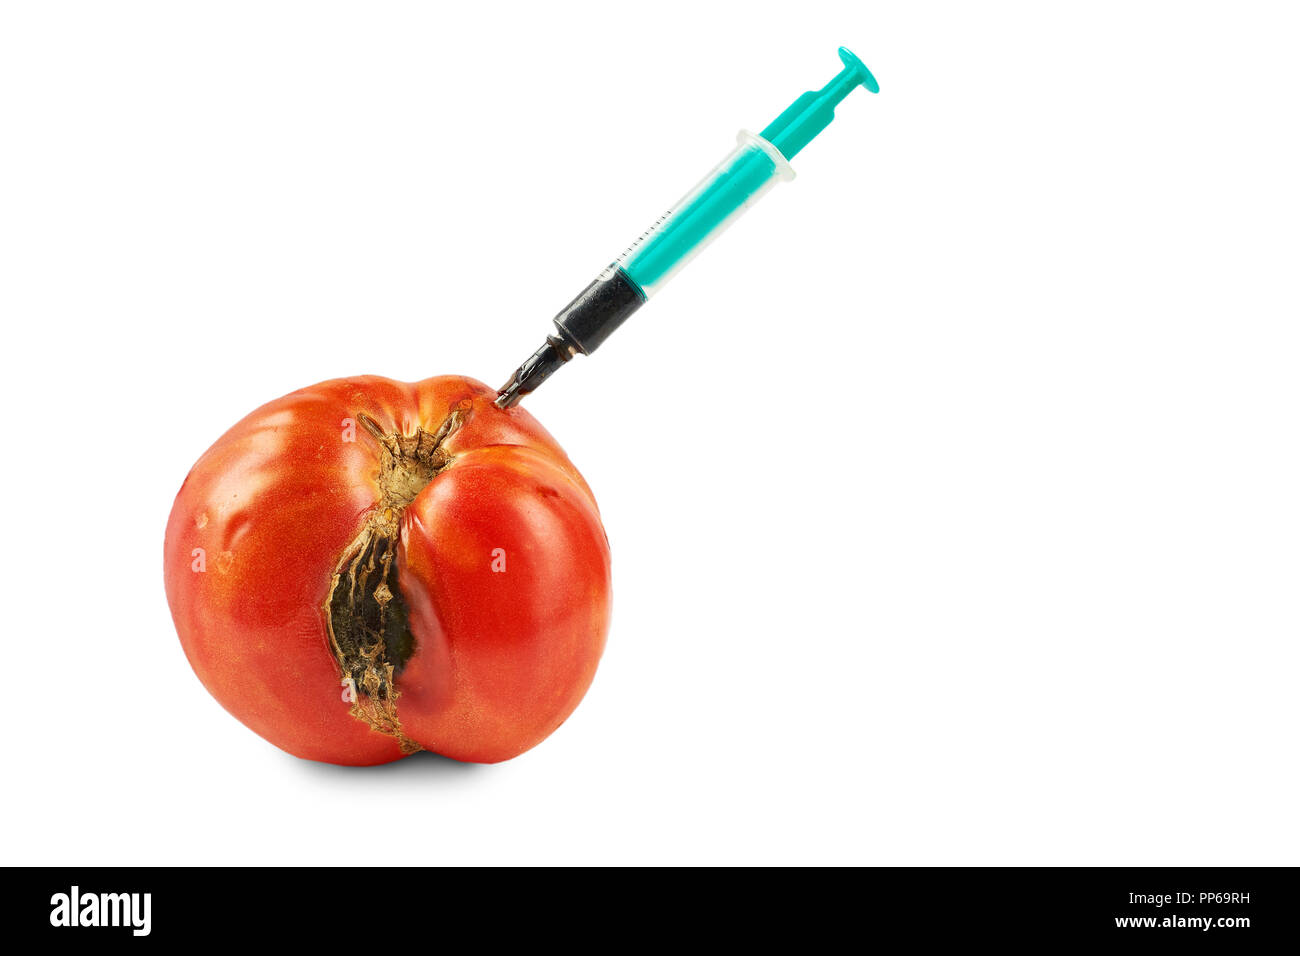 Spoiled, rotten tomato with stuck syringe isolated on white background. Stock Photo